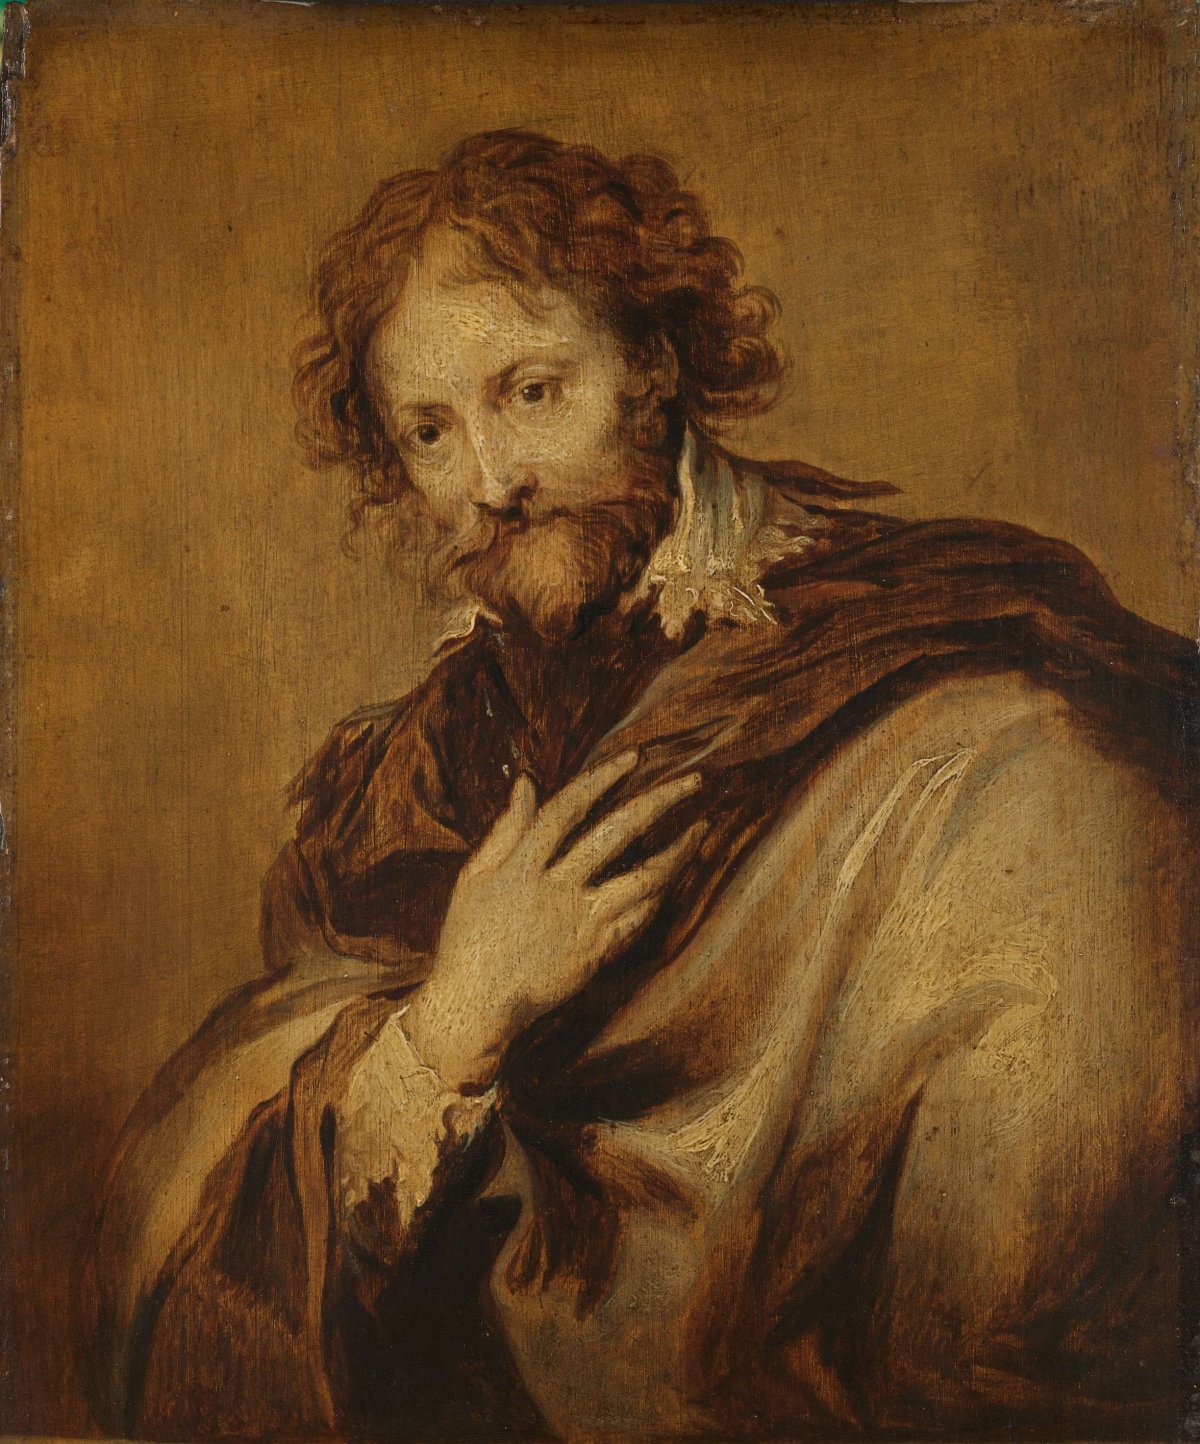 Portrait of Peter Paul Rubens (1577-1640), Anthony van Dyck, c. 1630 - c. 1650